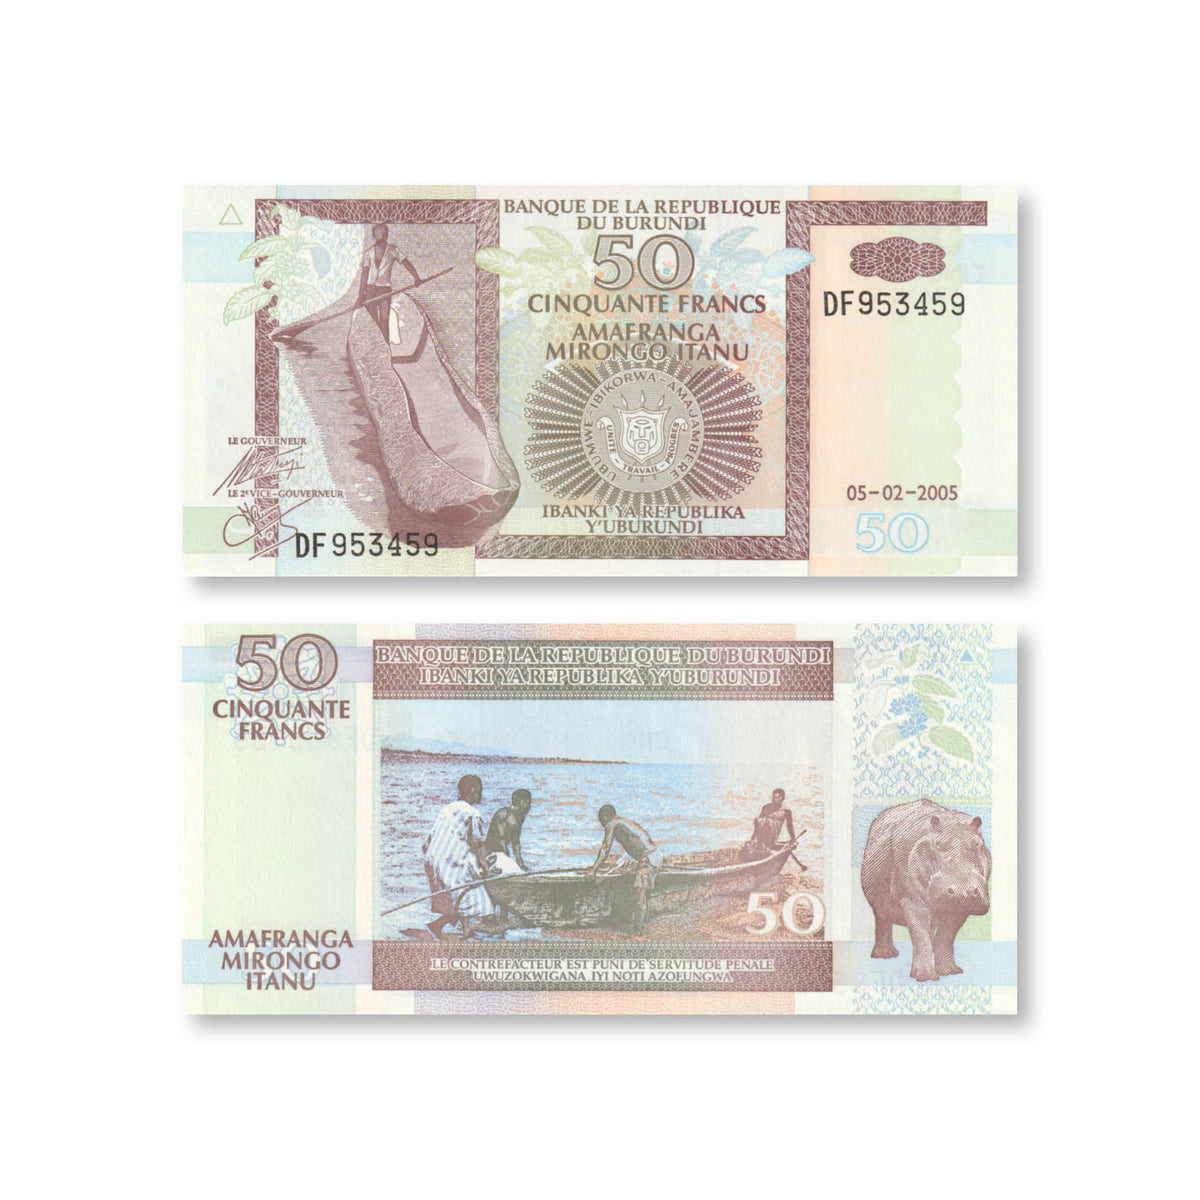 Burundi 50 Francs, 2005, B222e, P36e, UNC - Robert's World Money - World Banknotes